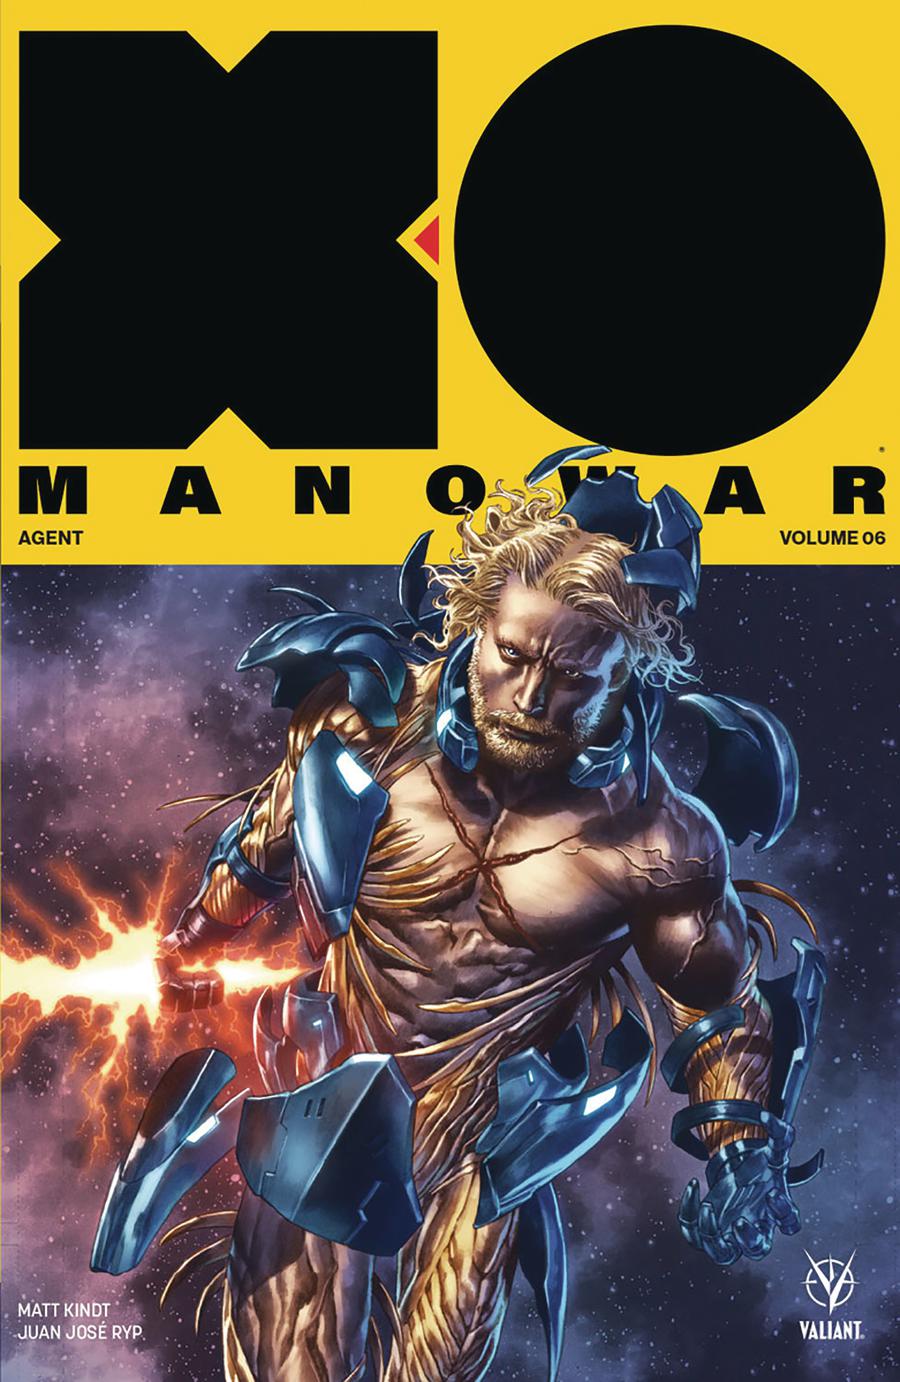 X-O Manowar (2017) Vol 6 Agent TP